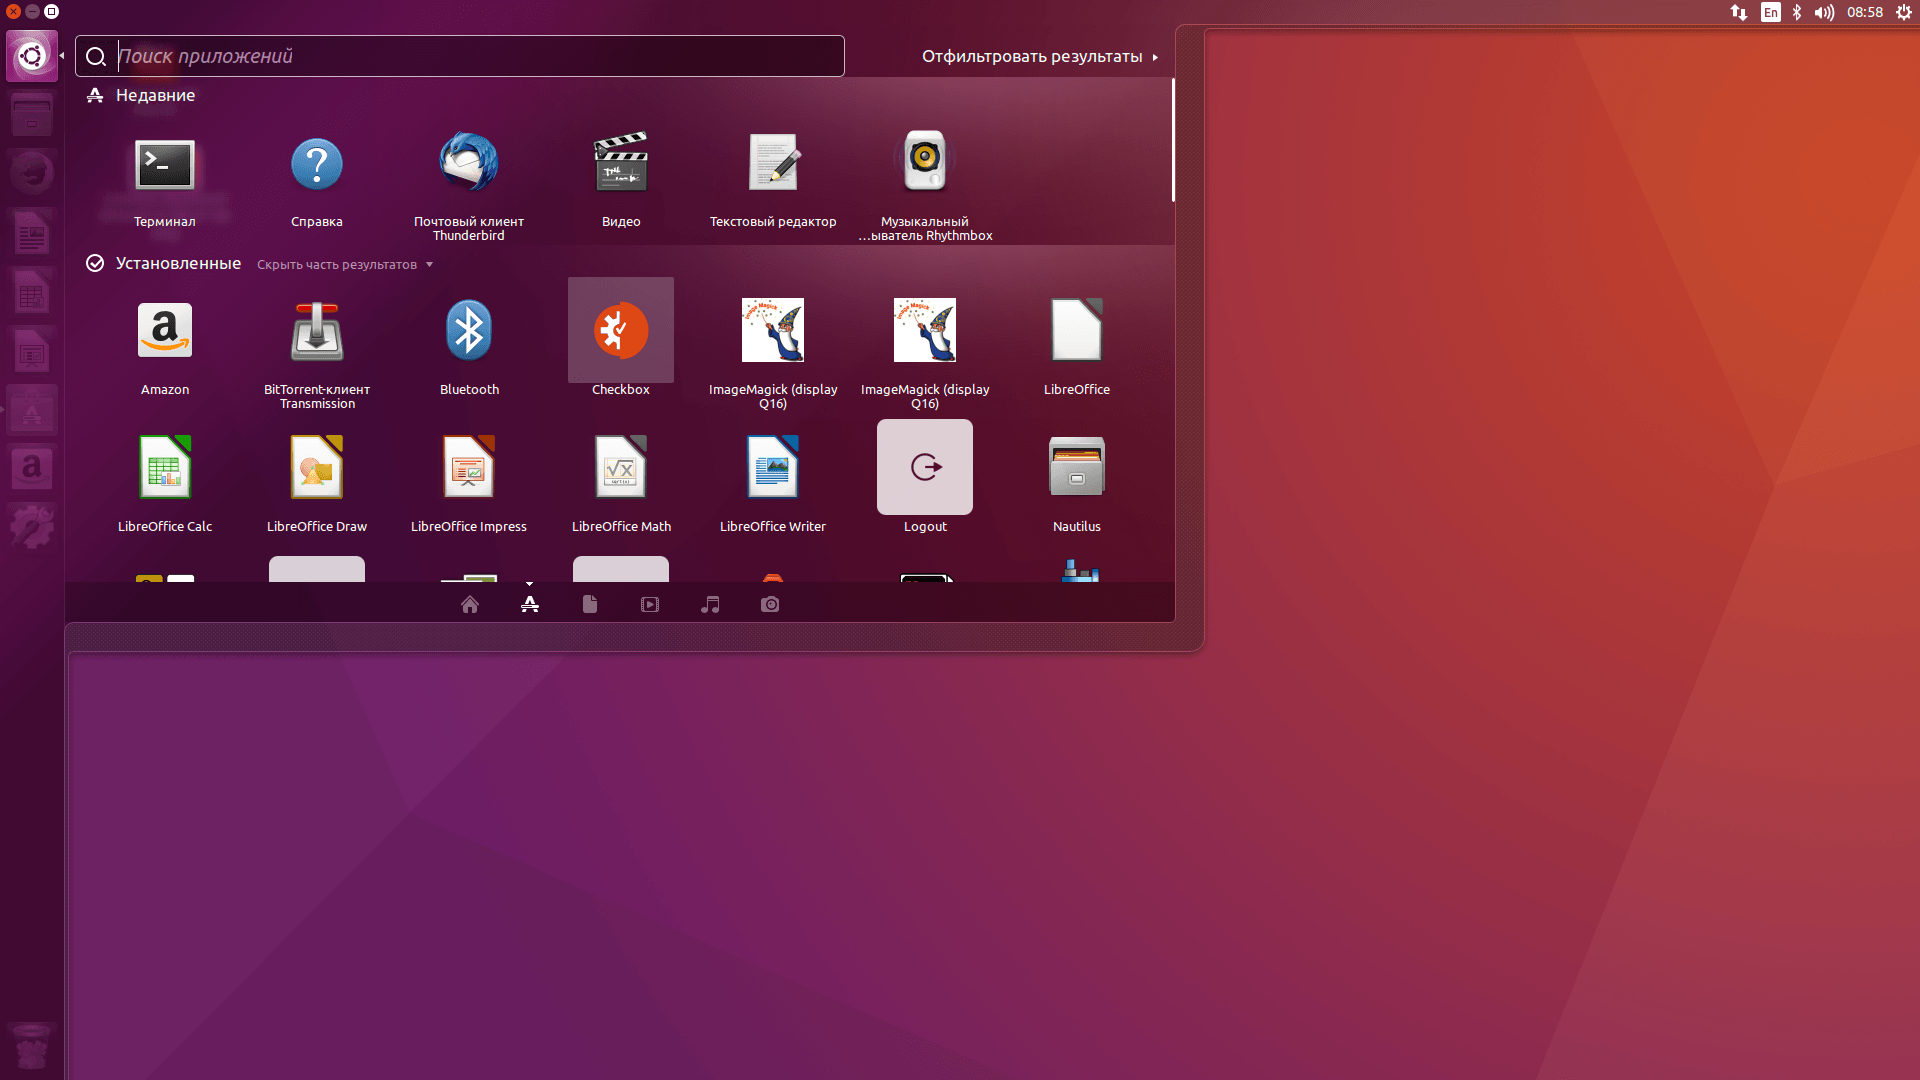 Video result. Ubuntu 16.04 LTS. Операционная система Ubuntu LTS. Линукс Операционная система убунту. Ubuntu 22.04.